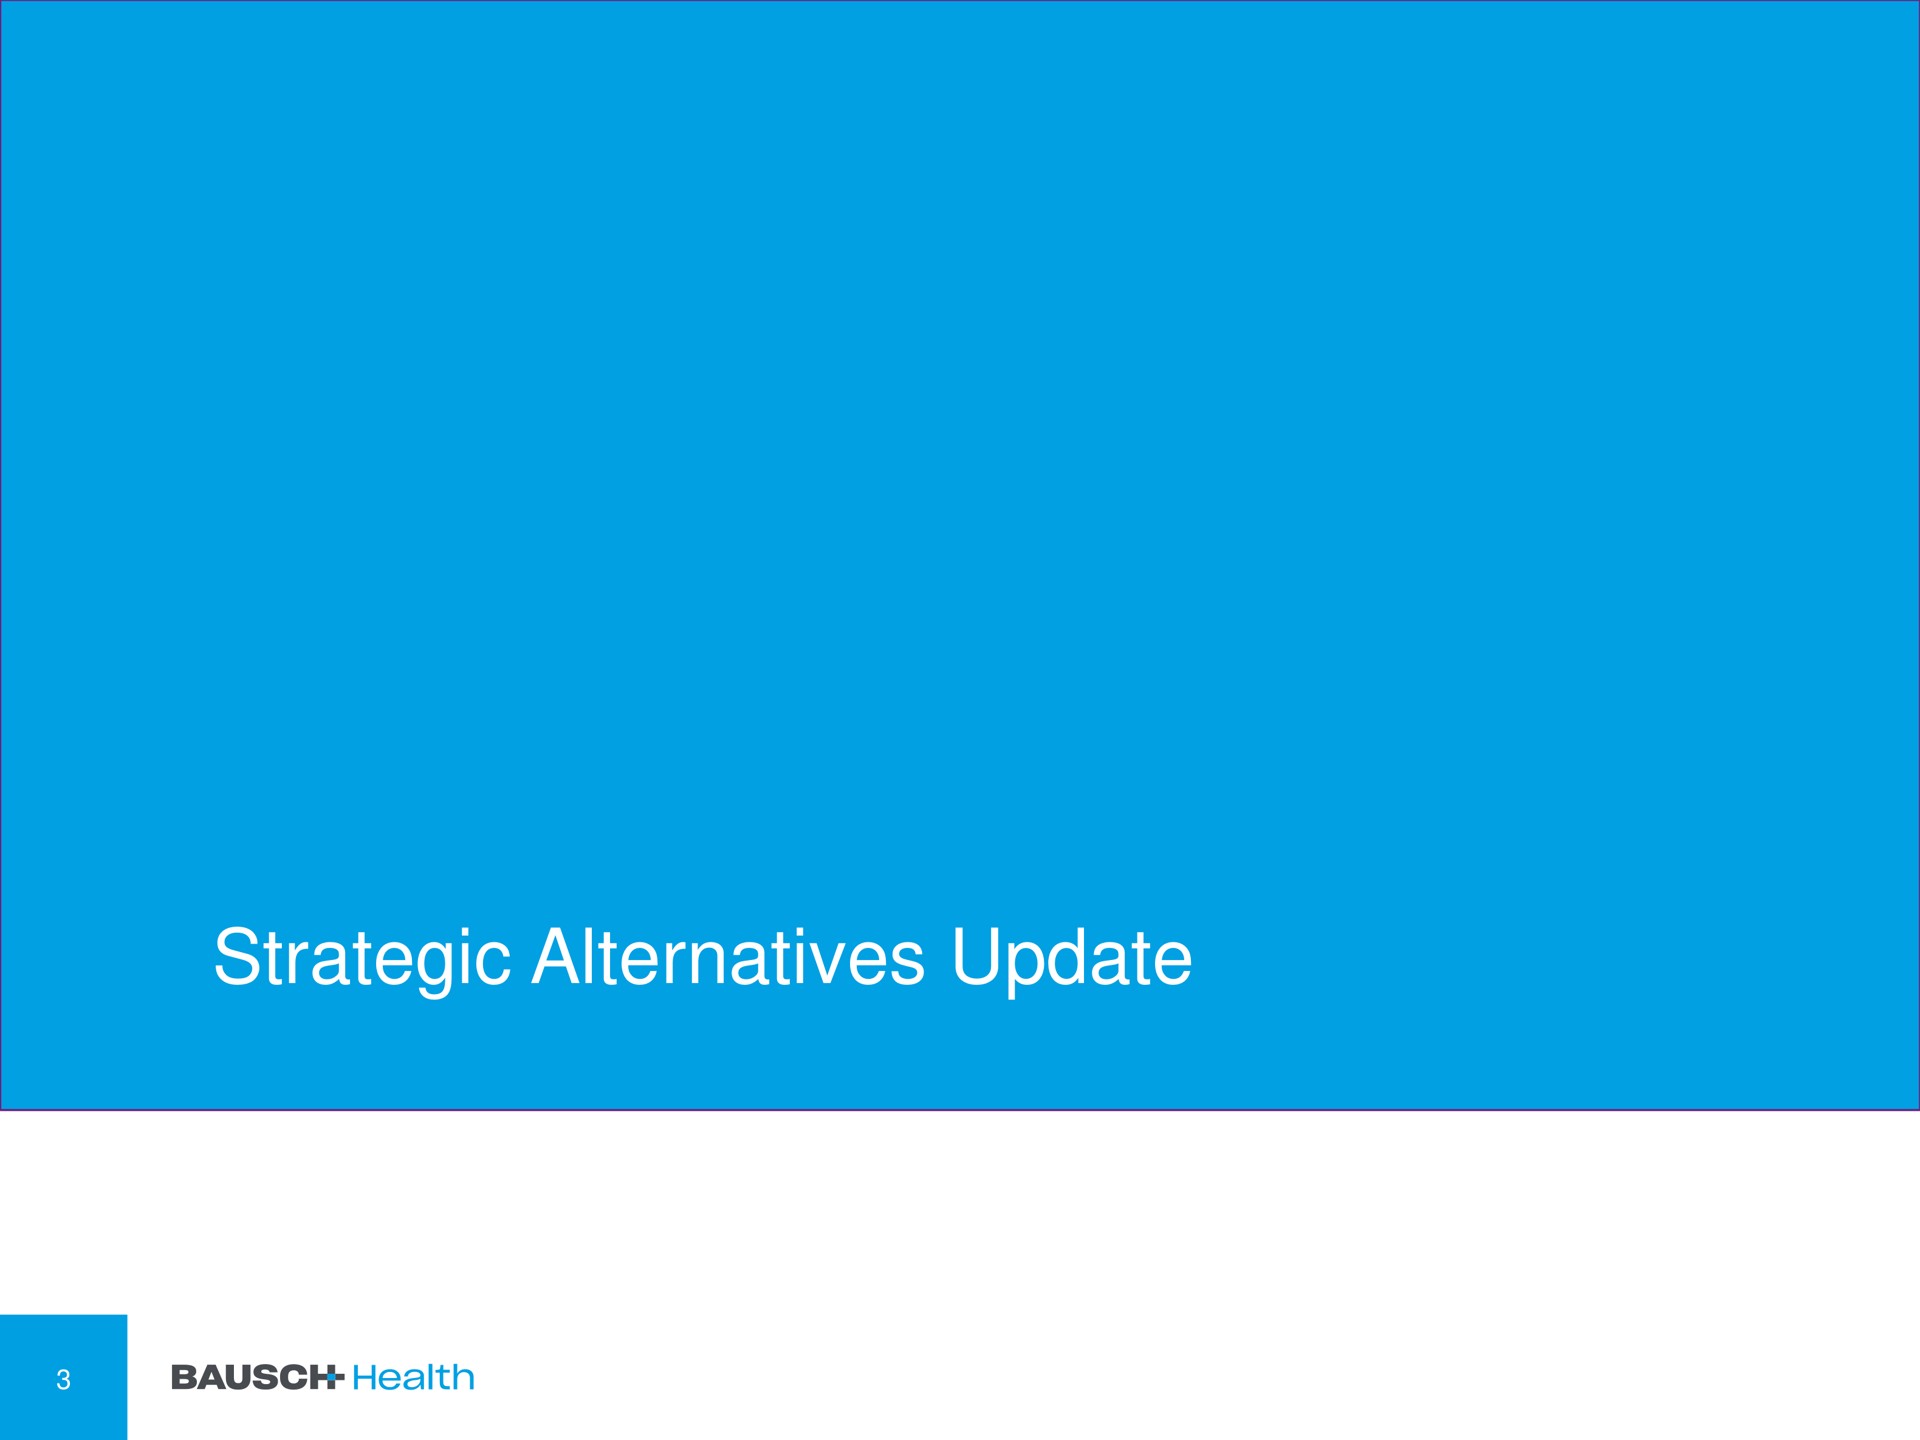 strategic alternatives update | Bausch Health Companies